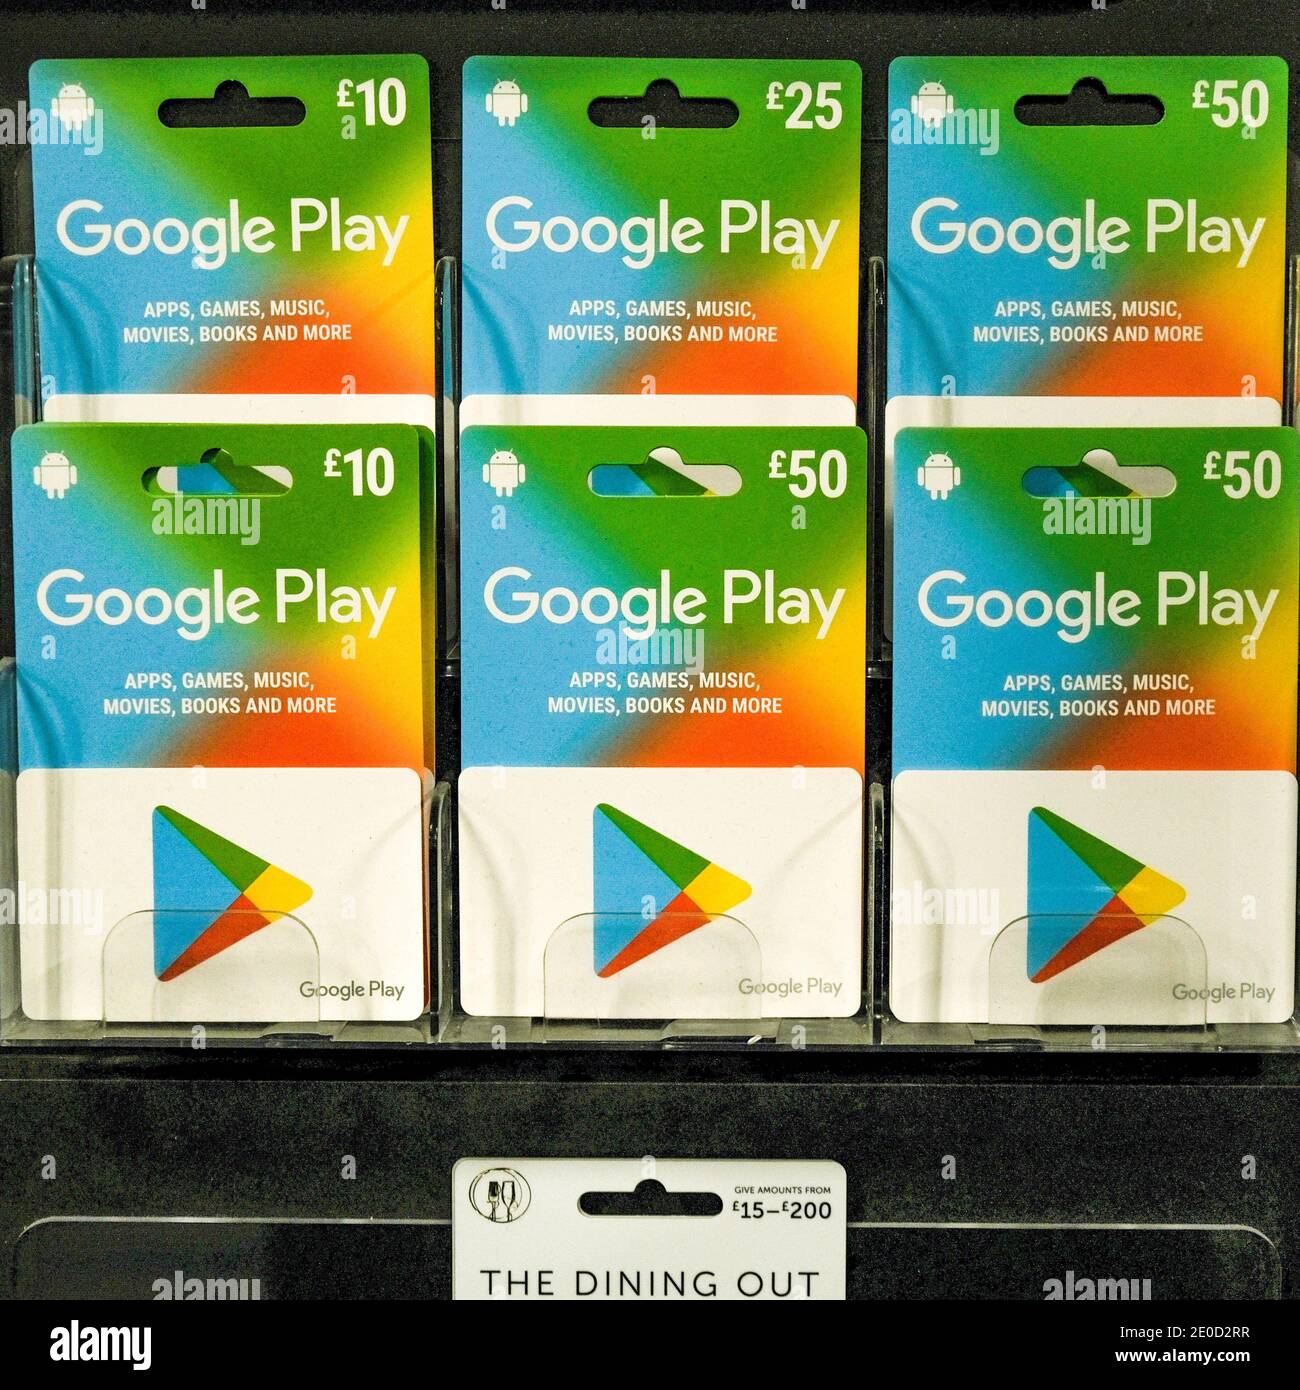 GooglePlay EUR 15 Gift Card